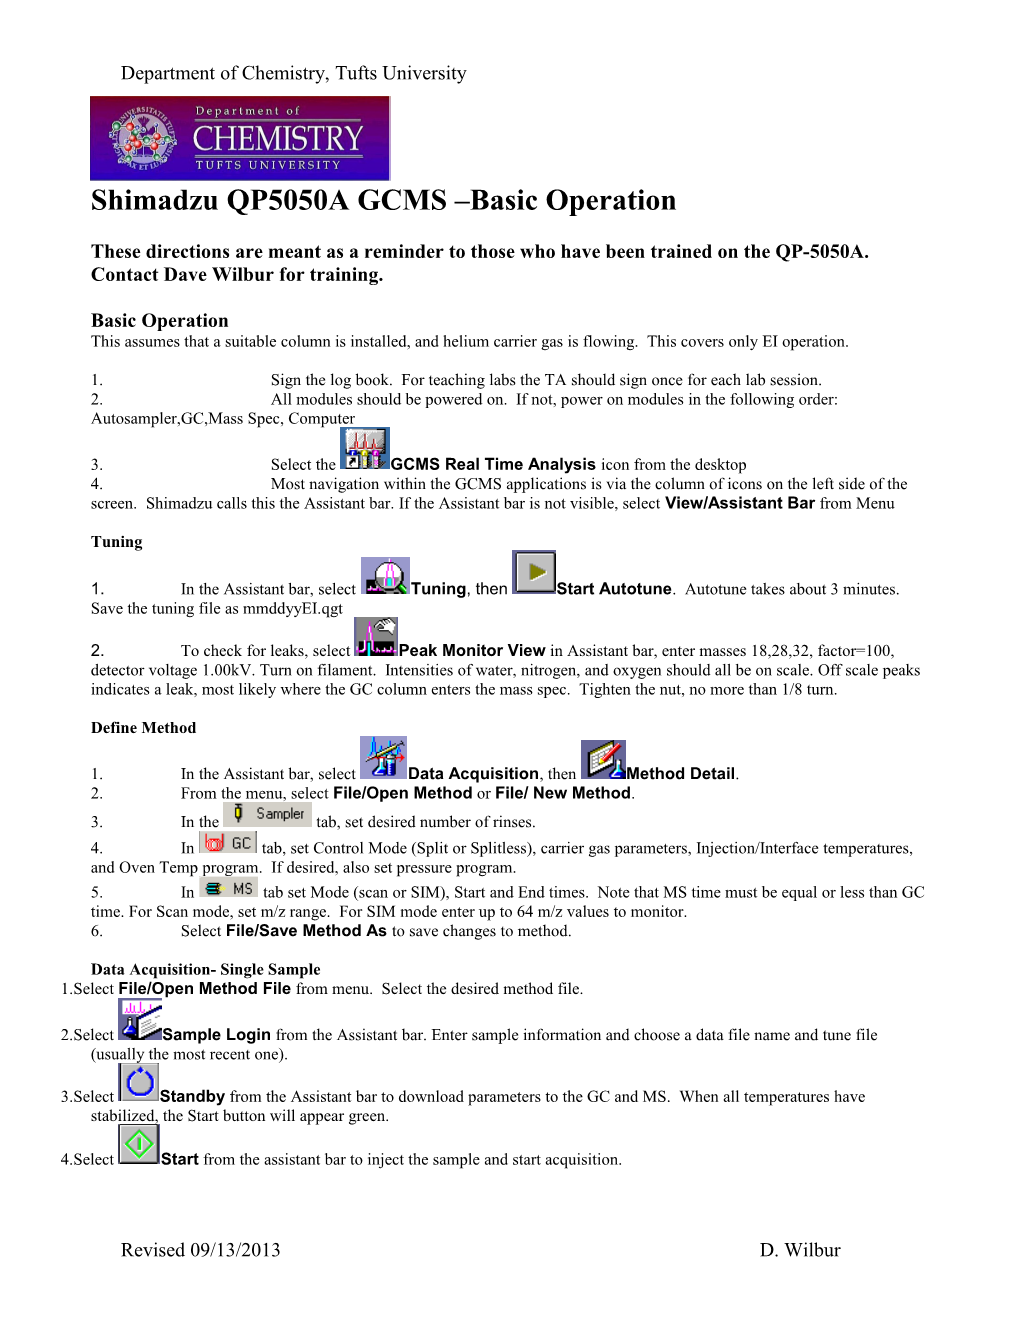 Shimadzu QP5050A GCMS Basic